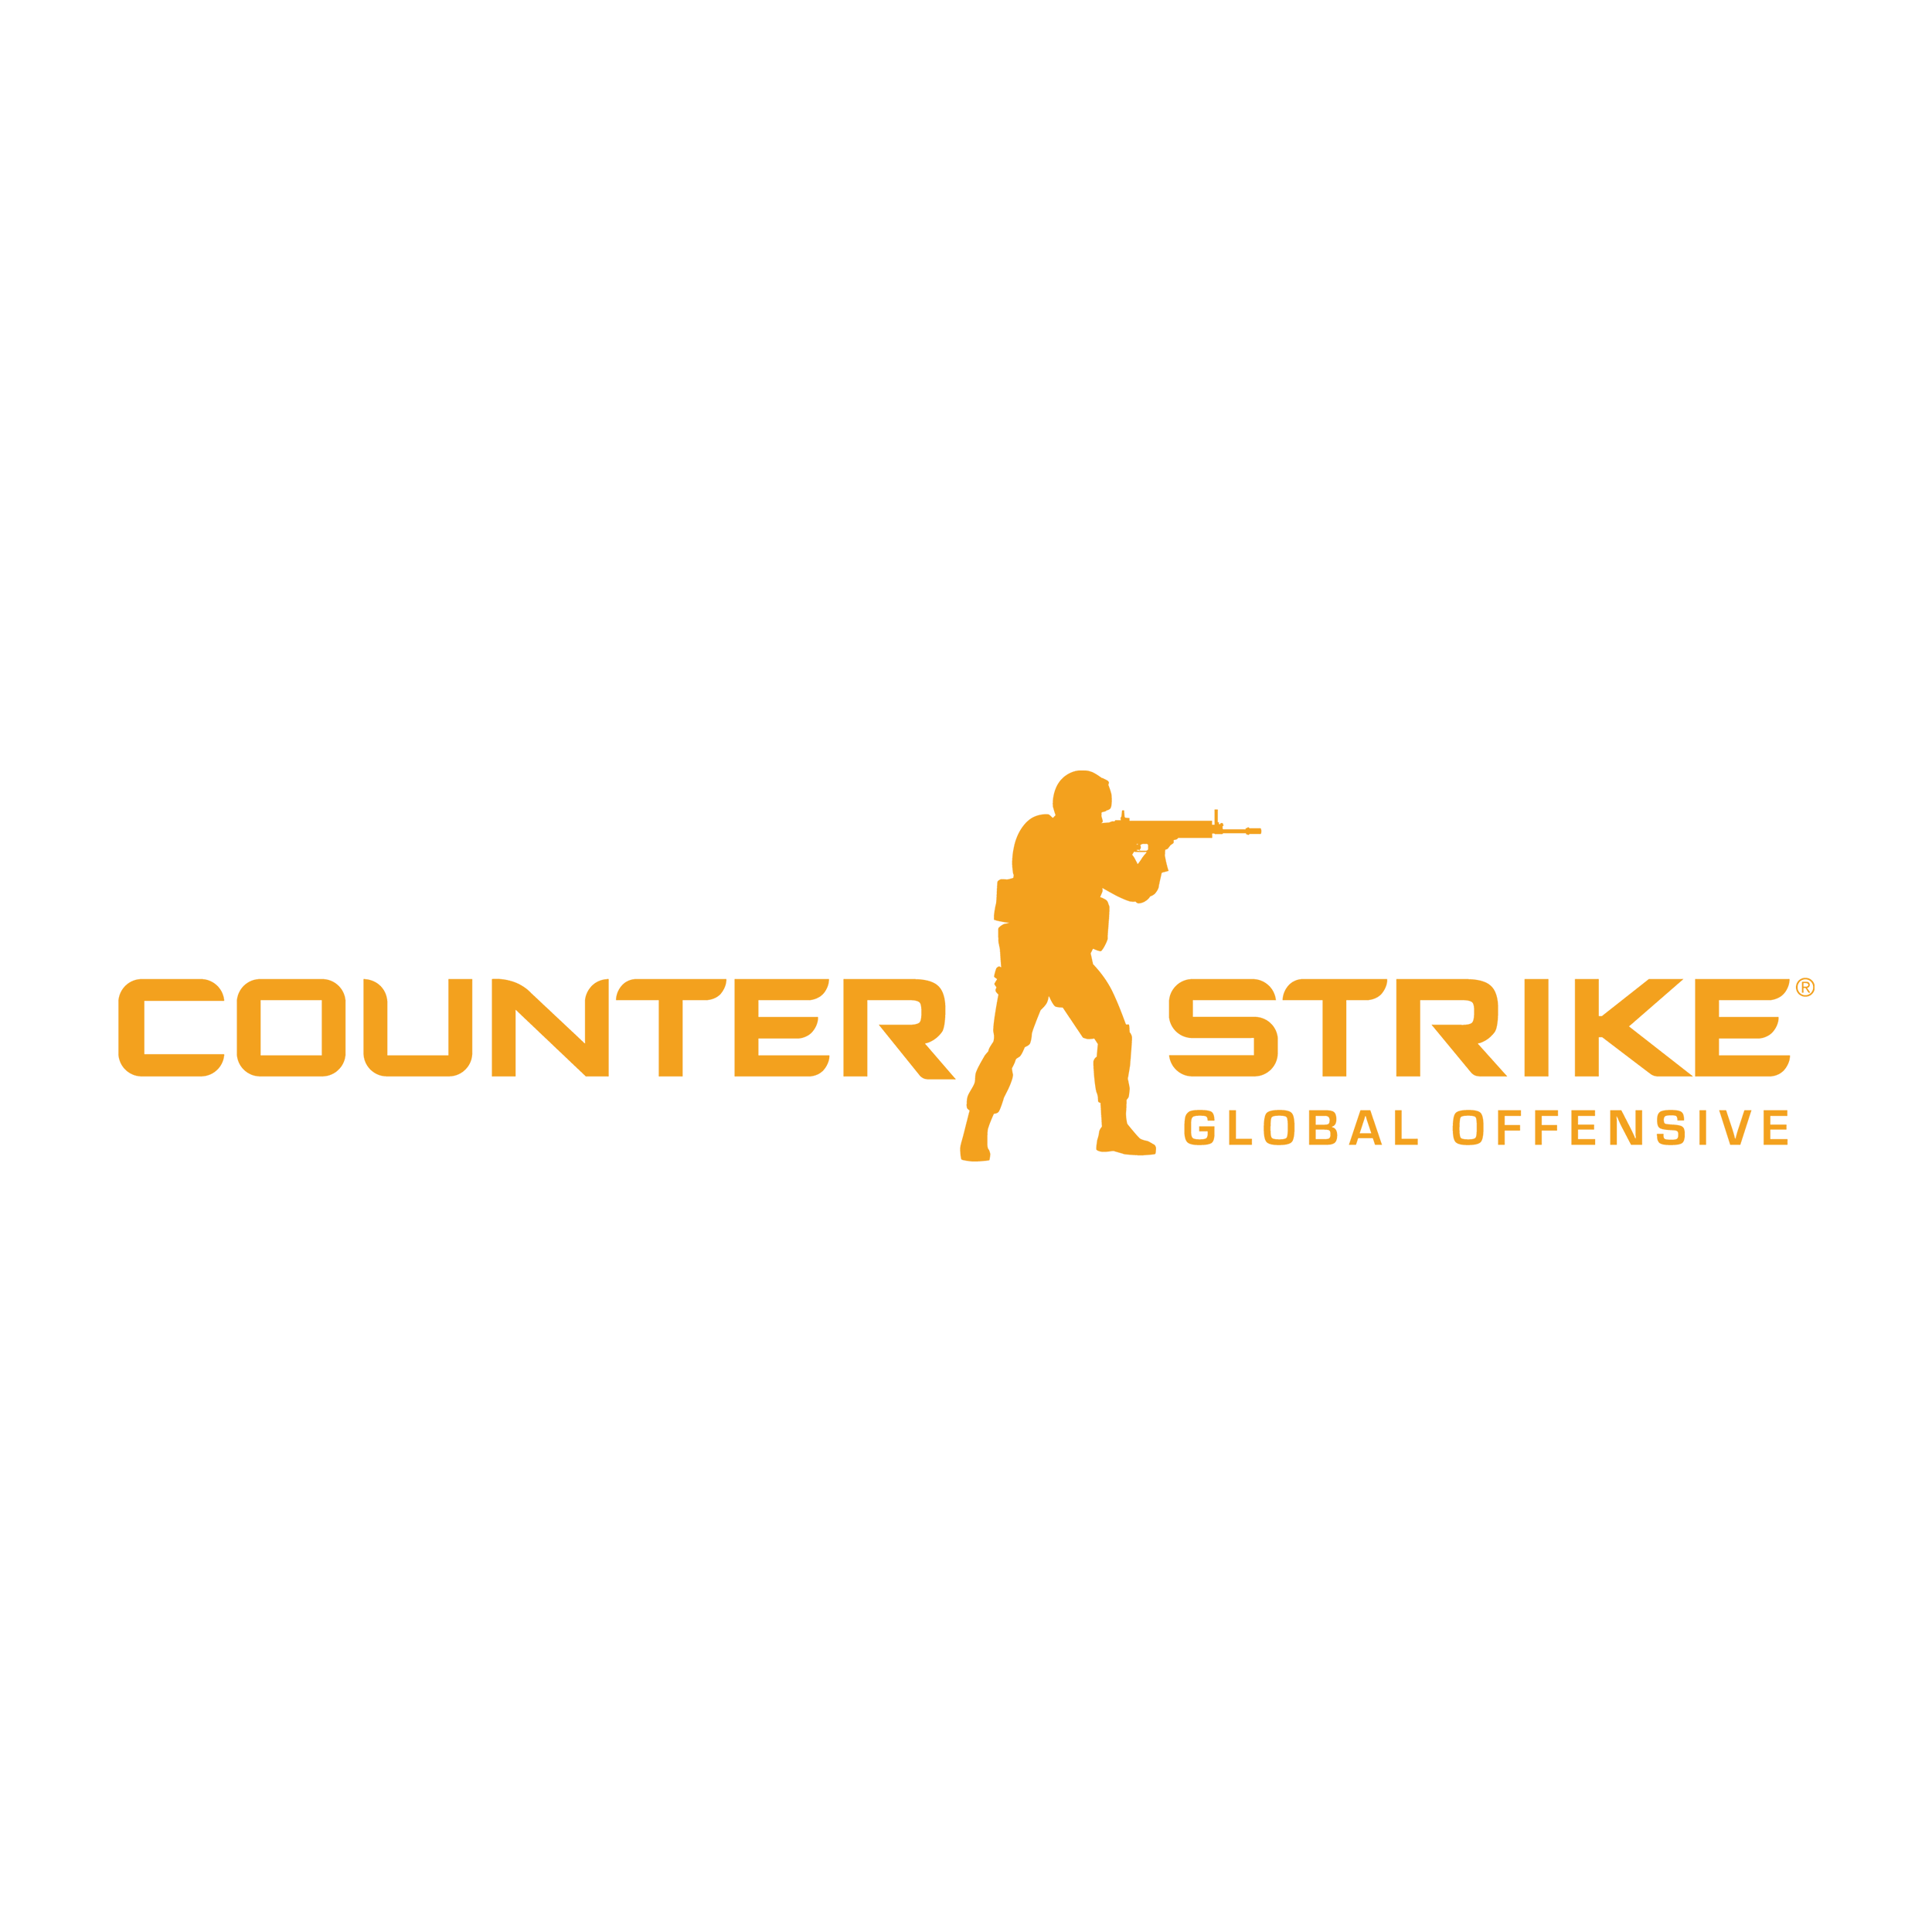 Counter-Strike: Global Offensive logo